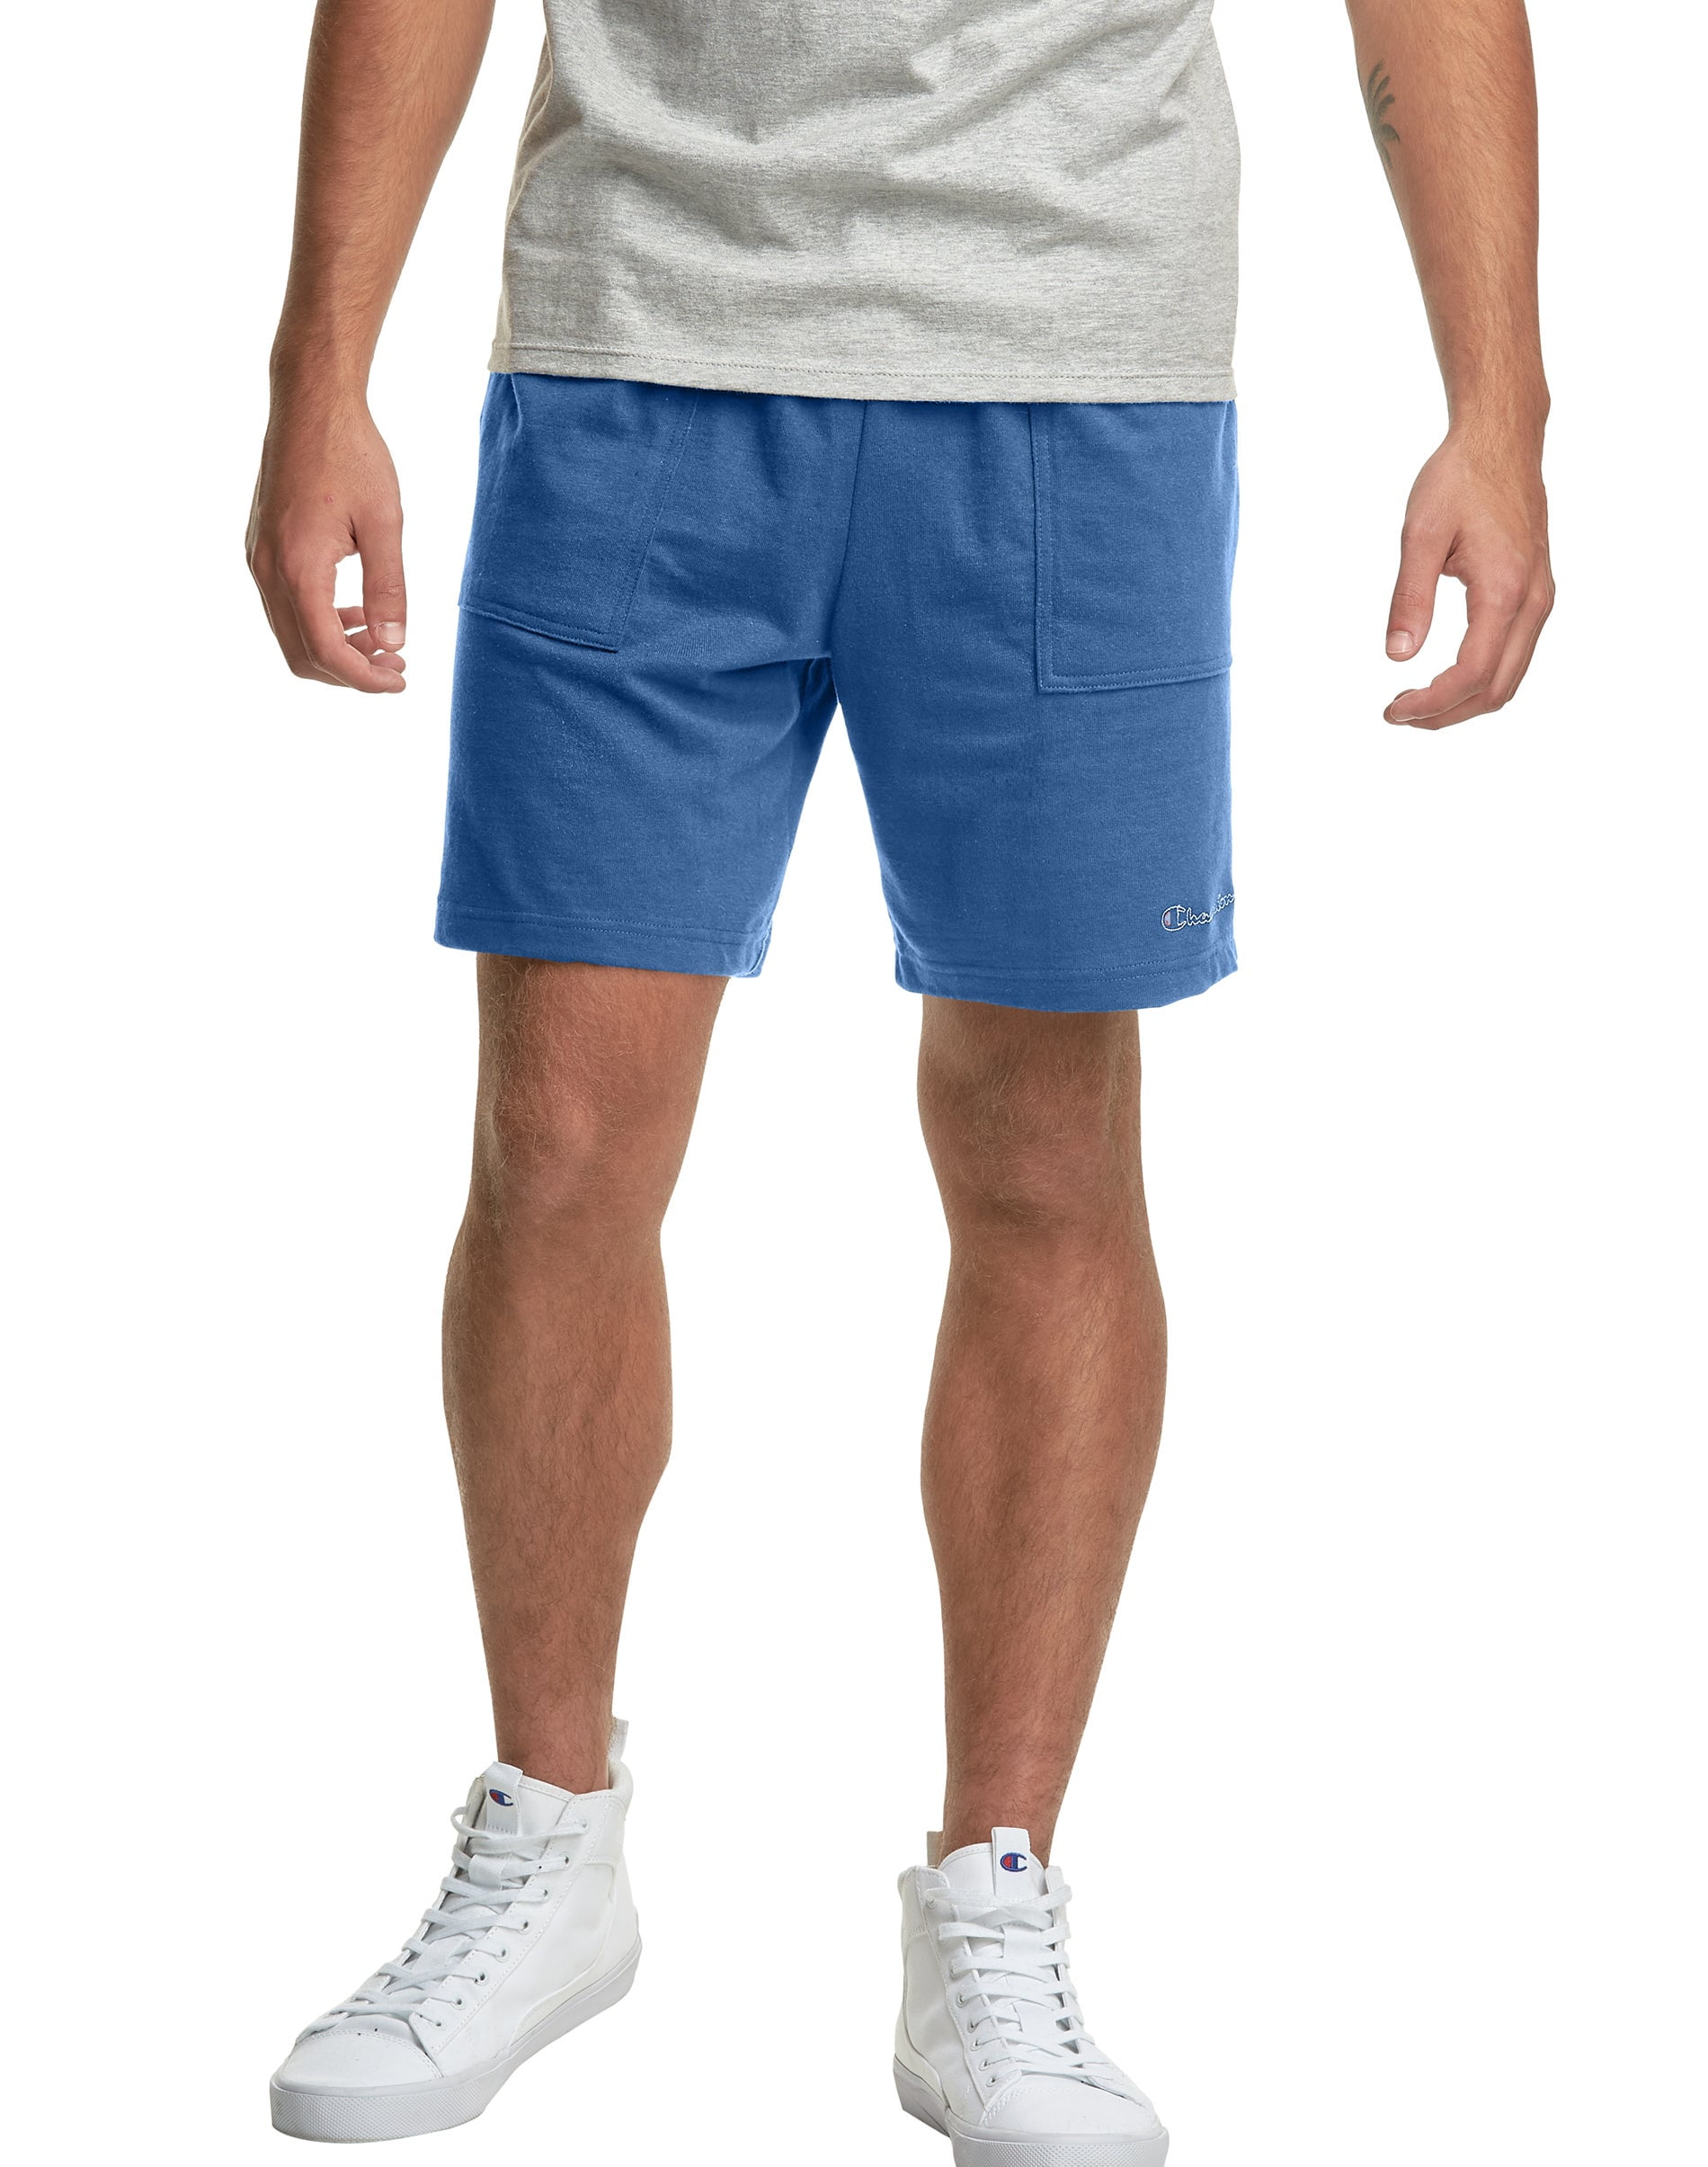 Champion - Champion Mens 7-inch Jersey Shorts, M, Shield - Walmart.com Walmart.com